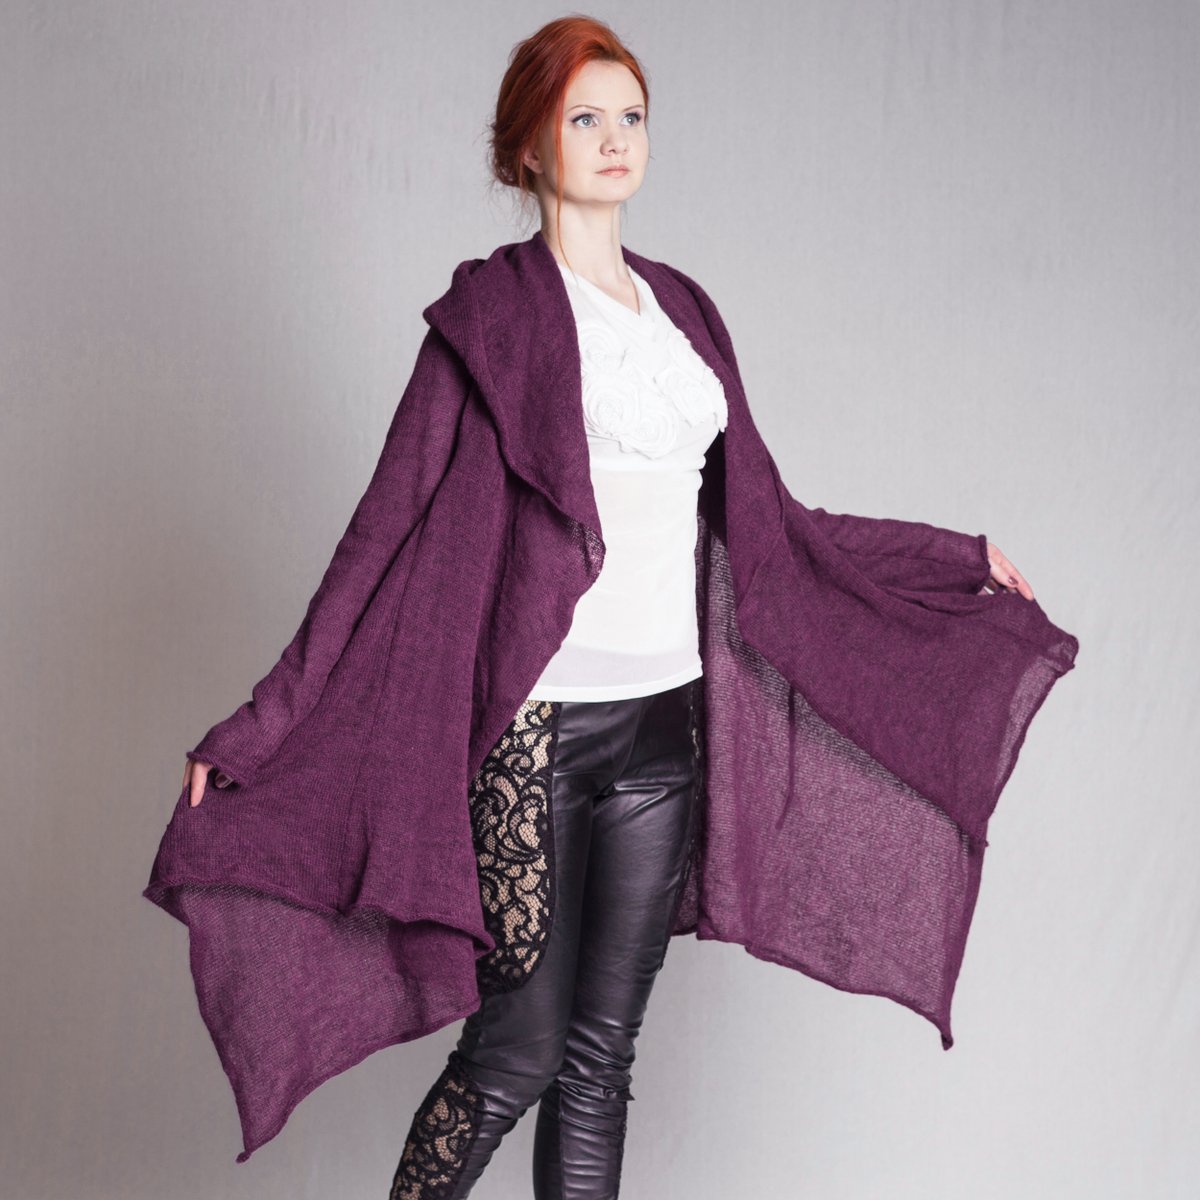 #Violet #mohair #cardigan, #Plum knit #asymmetrical freeform #bohemian jacket, #Purple #hippy boho #sweater etsy.me/2qPRPOt via @Etsy #handmade #smallbusiness #cybermonday #blackfriday #knitwear #silverreed #knitmaster